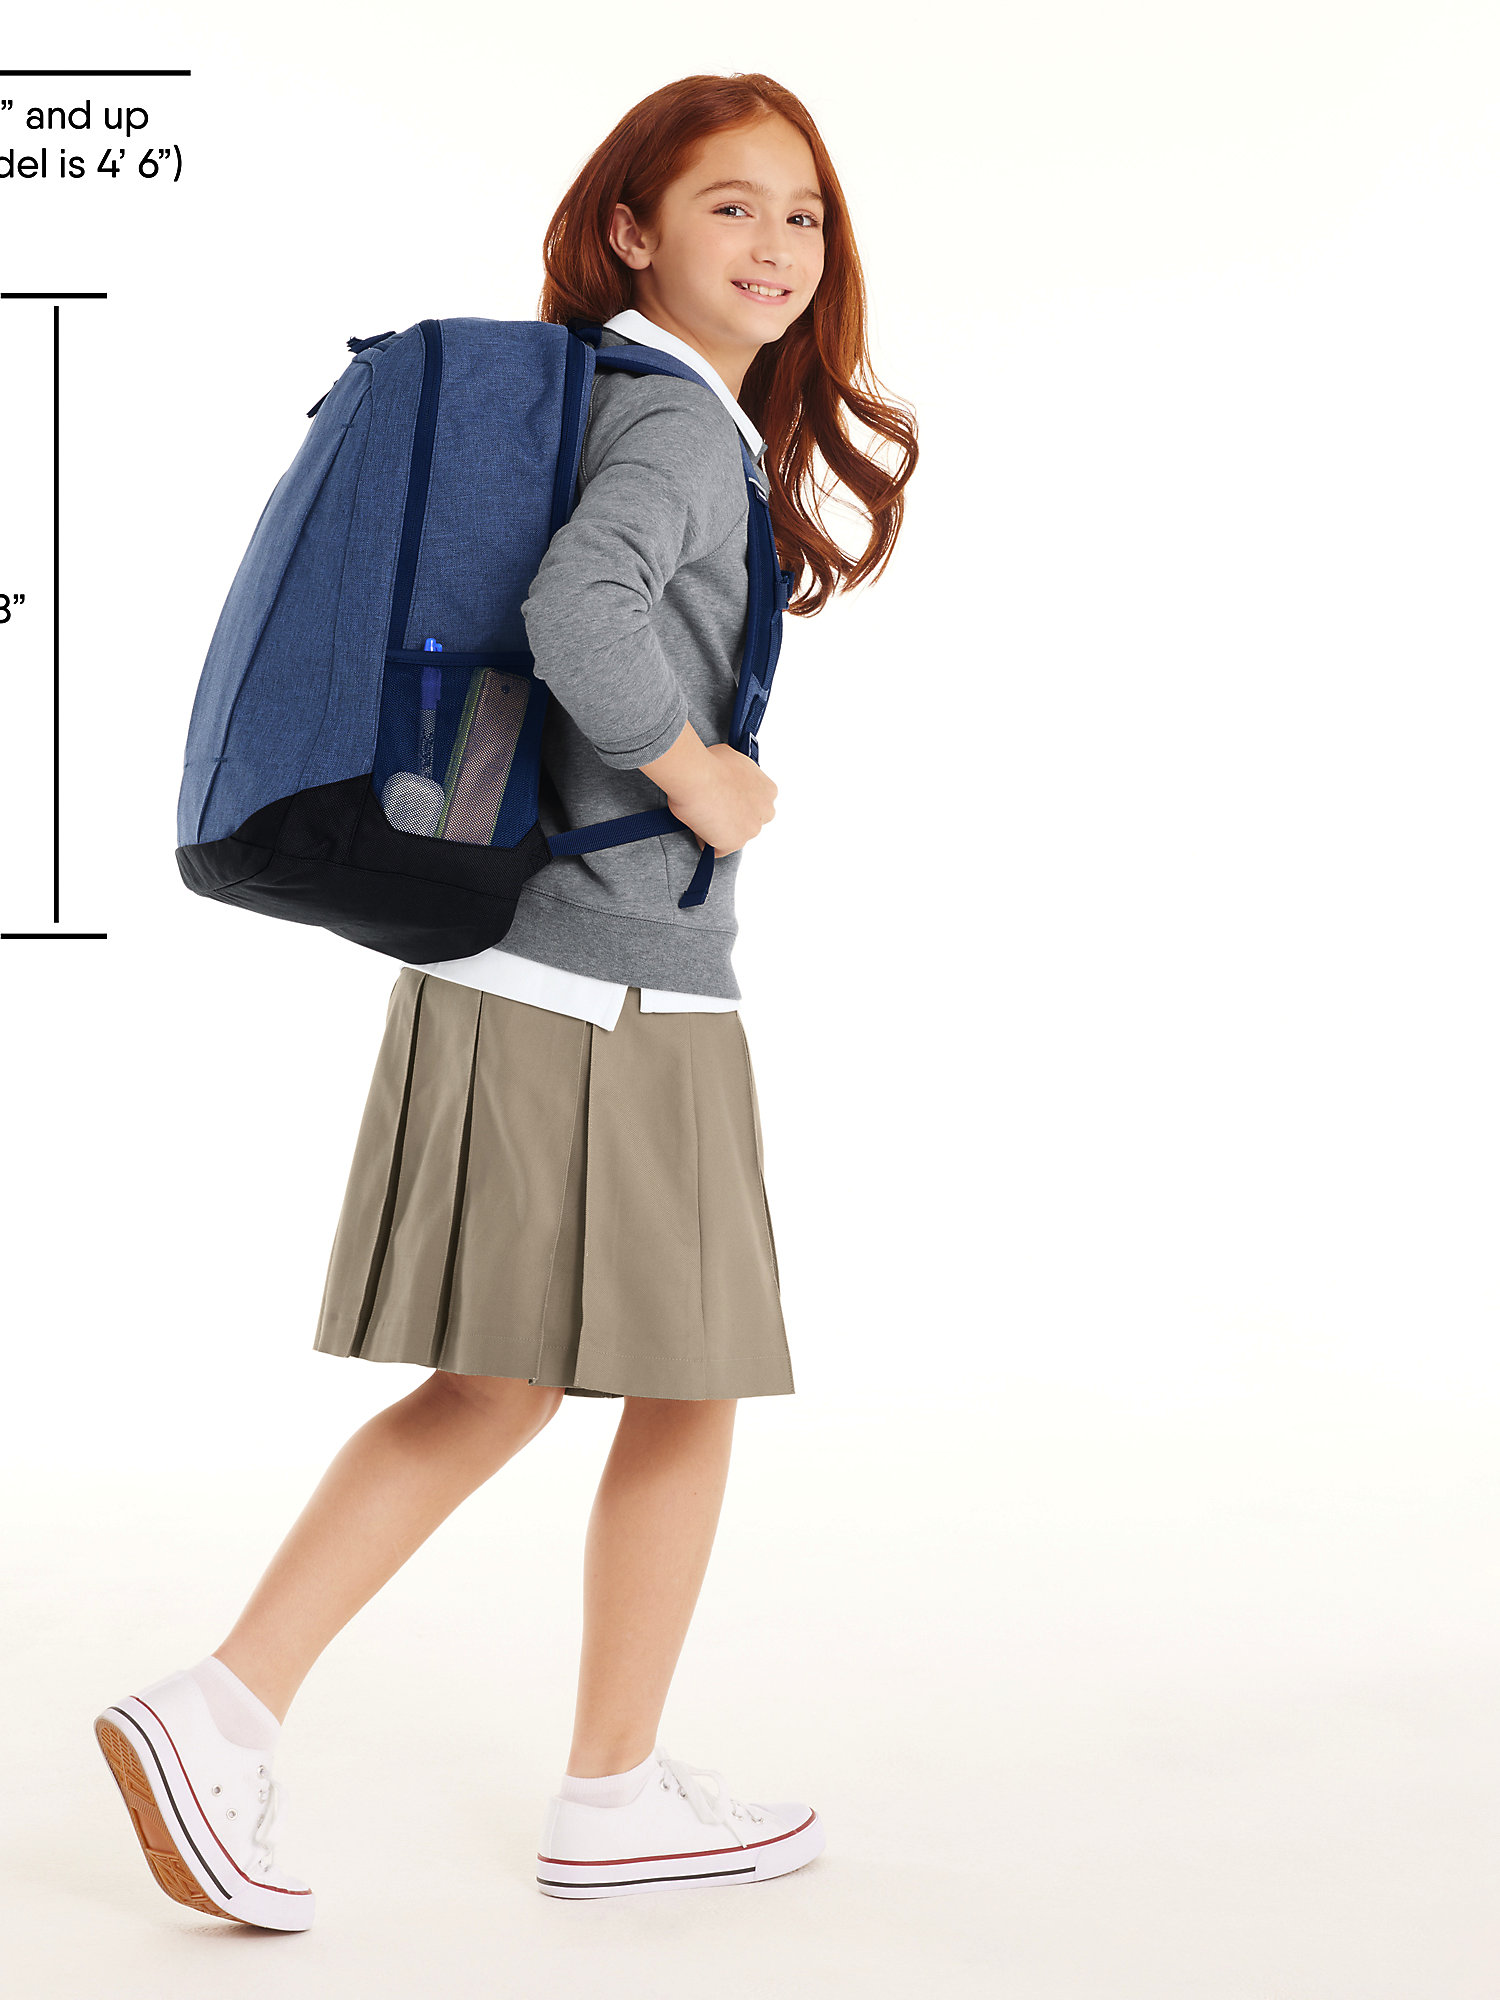 School Uniform Backpacks & Bags